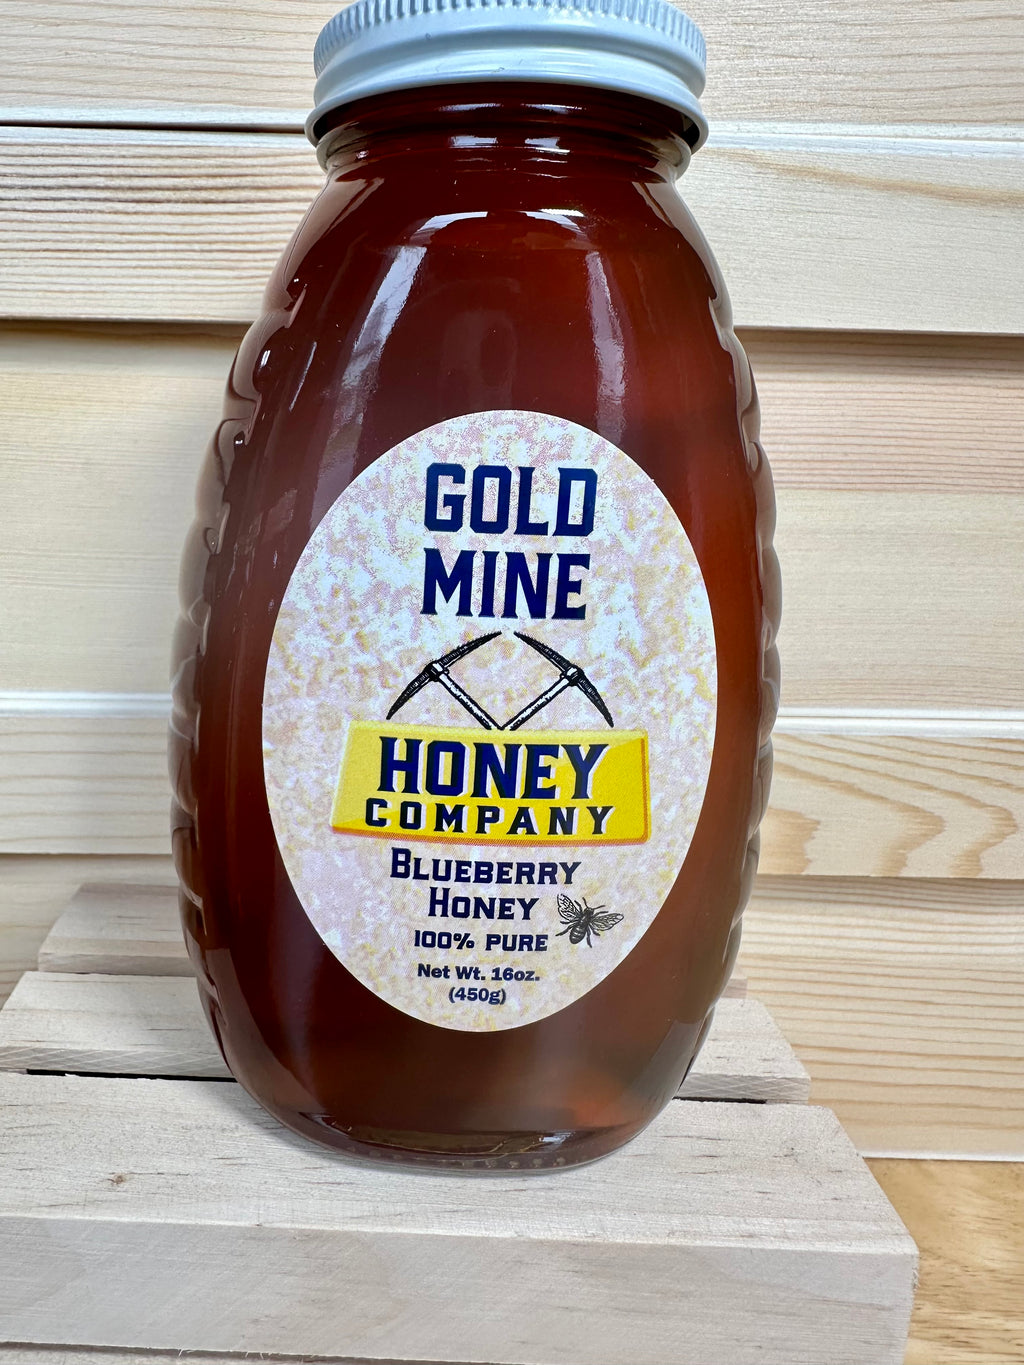 Blueberry Honey - gold mine honey company